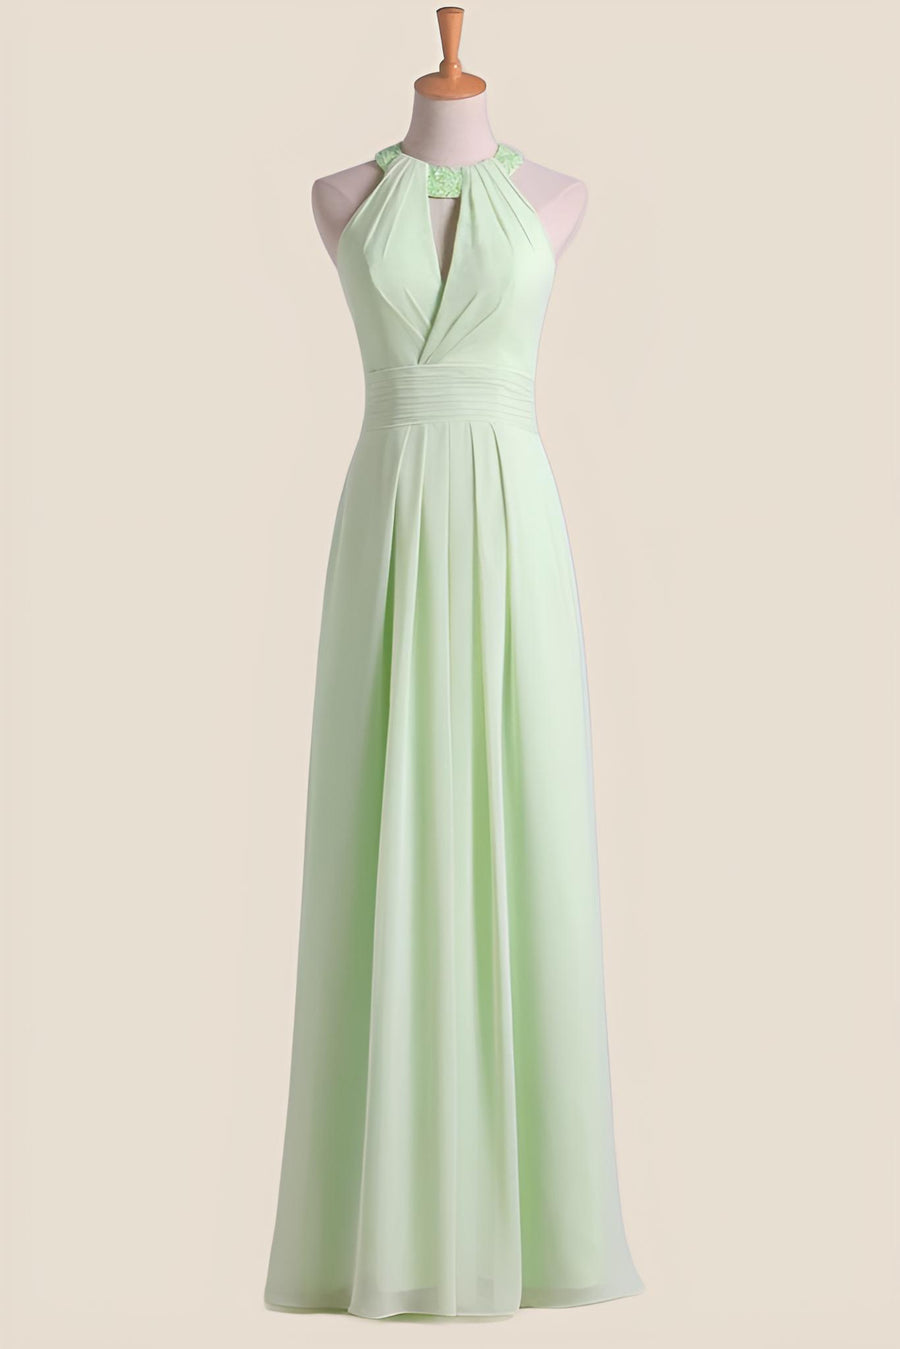 Halter Lemon Green Chiffon Long Bridesmaid Dress